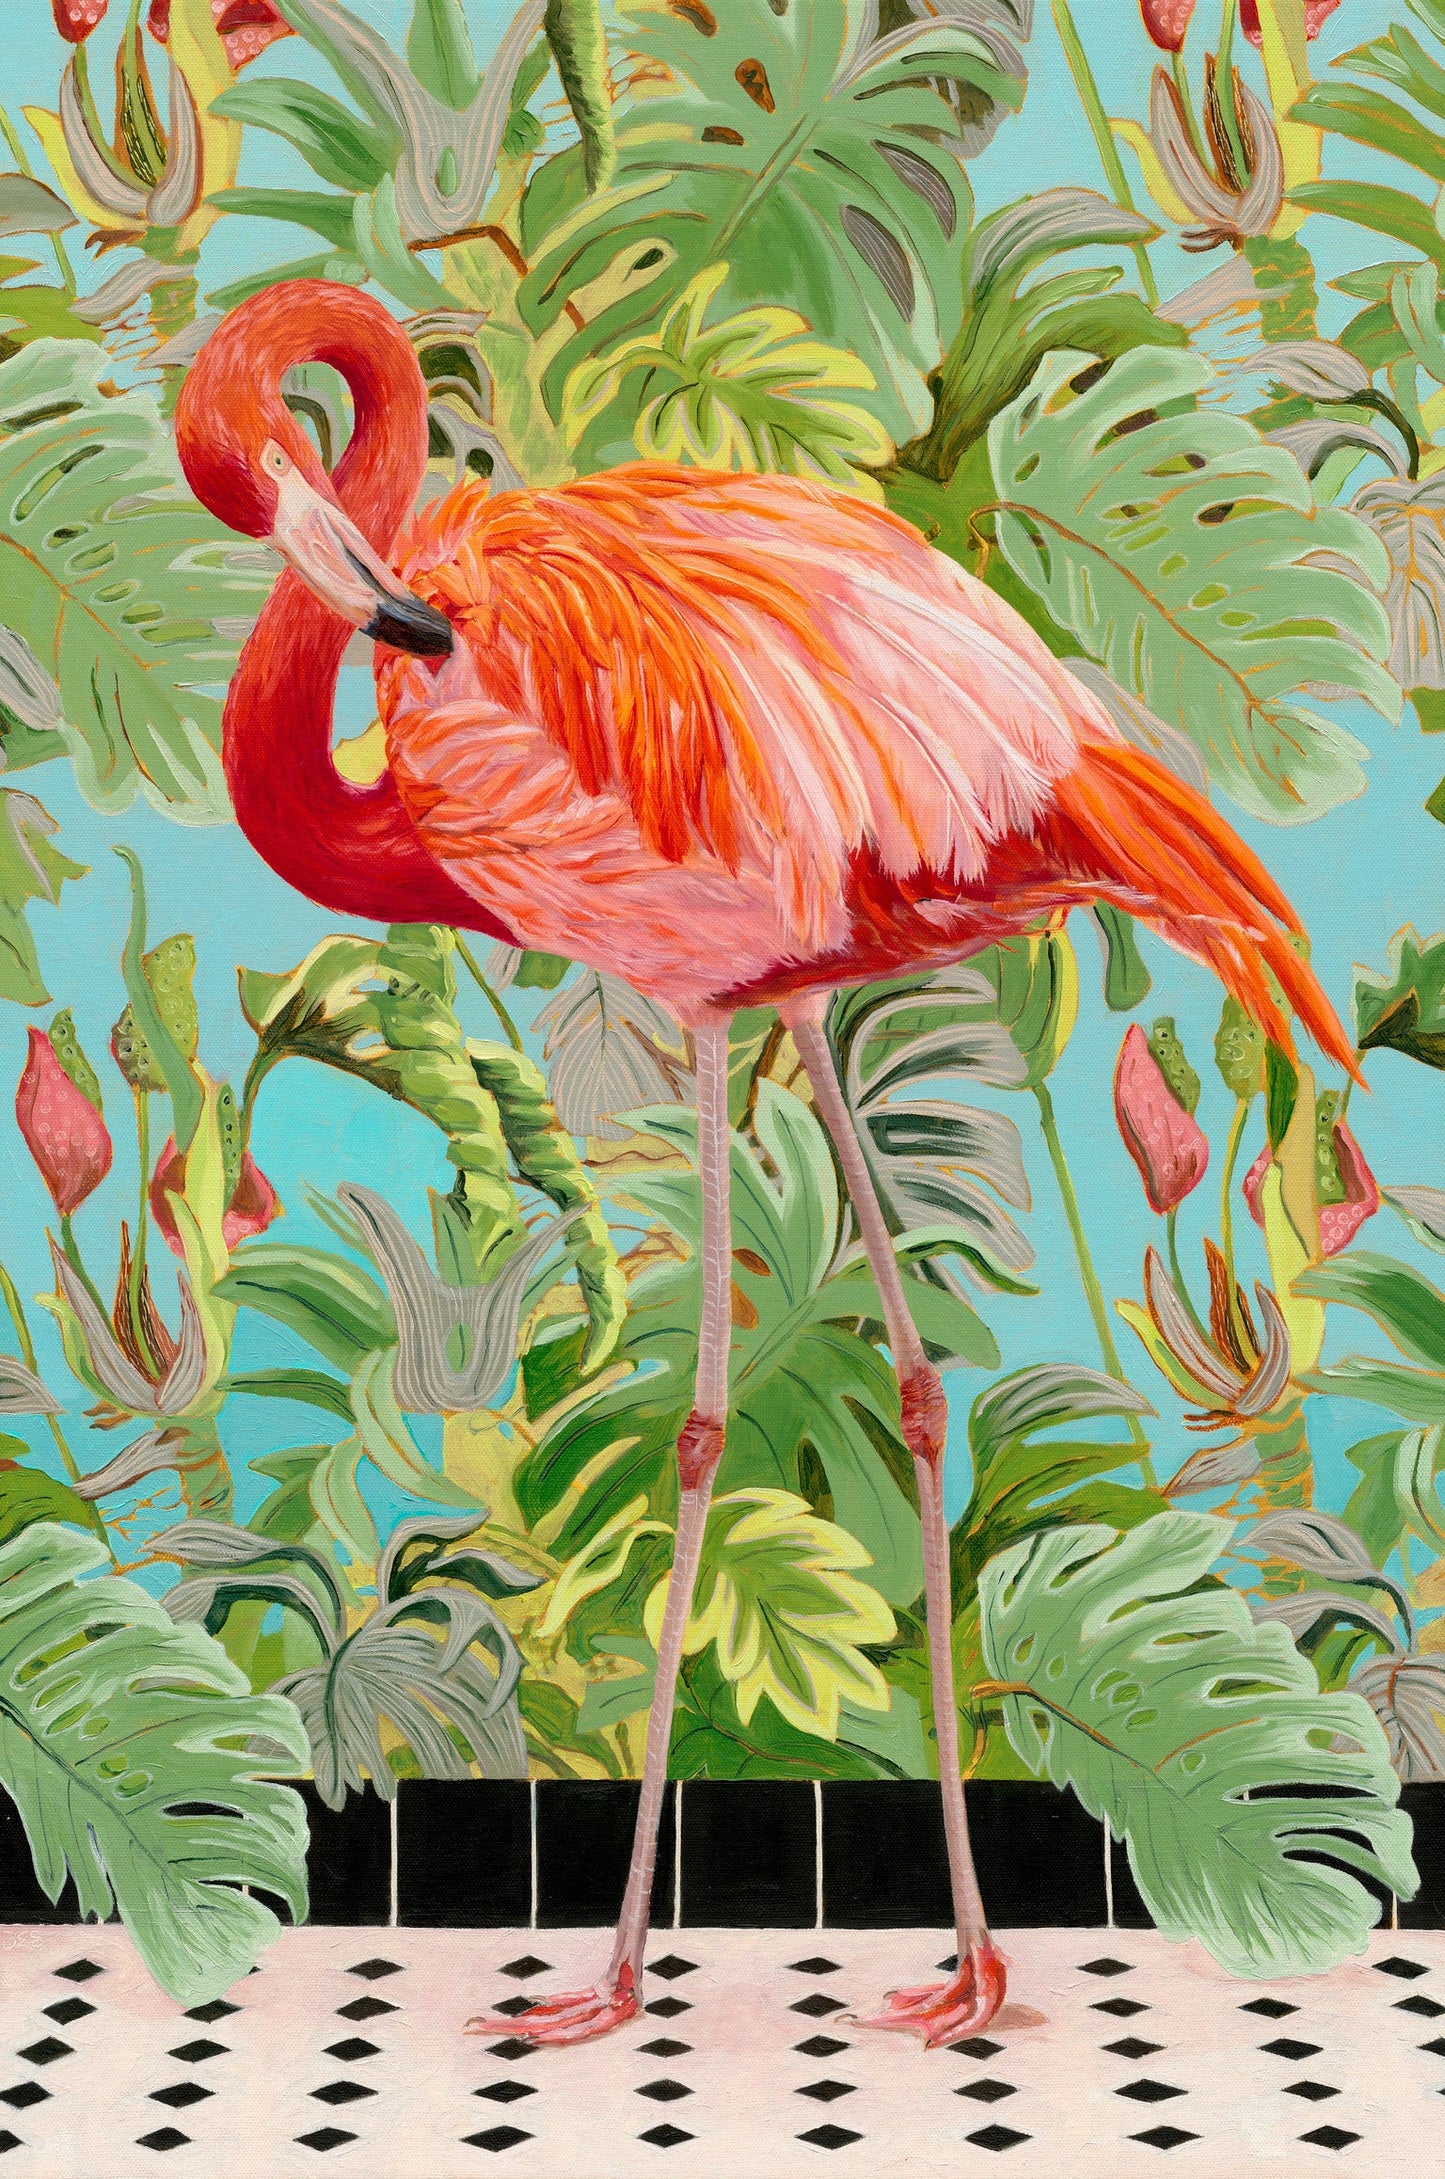 Lost Flamingo limited edition fine art print - Fiona Smith Art & Writing